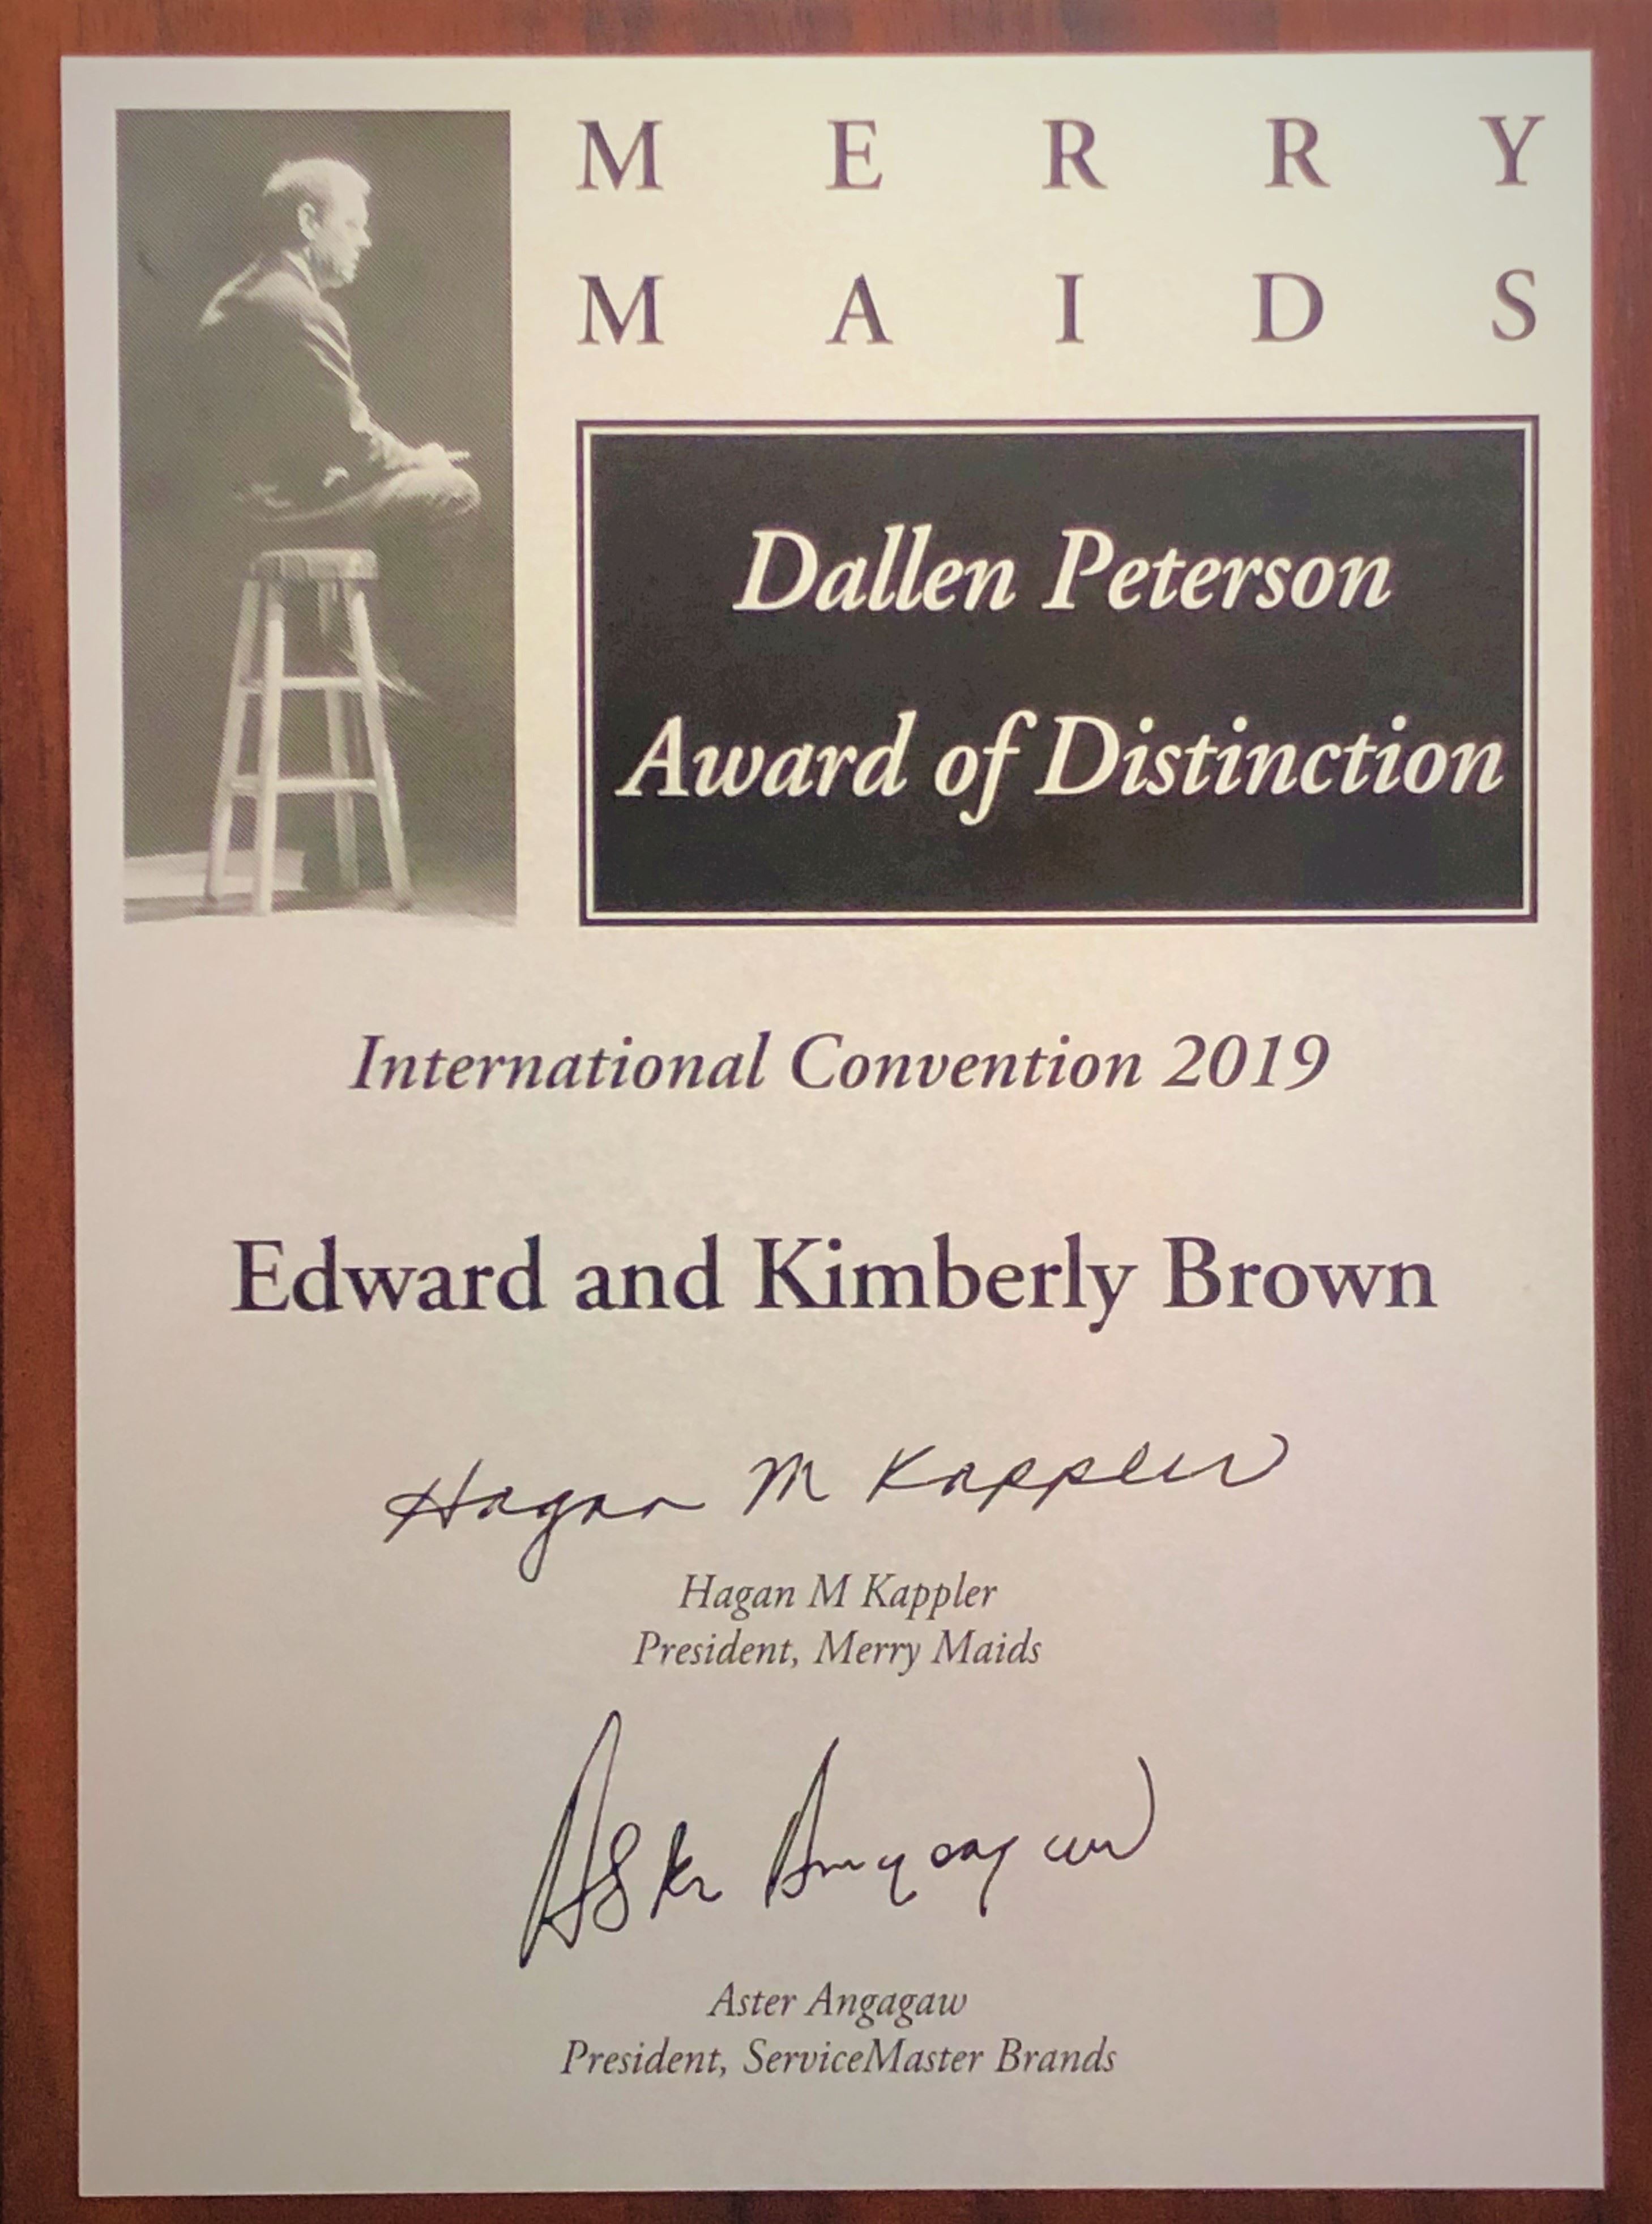 Dallen Peterson Award of Distinction